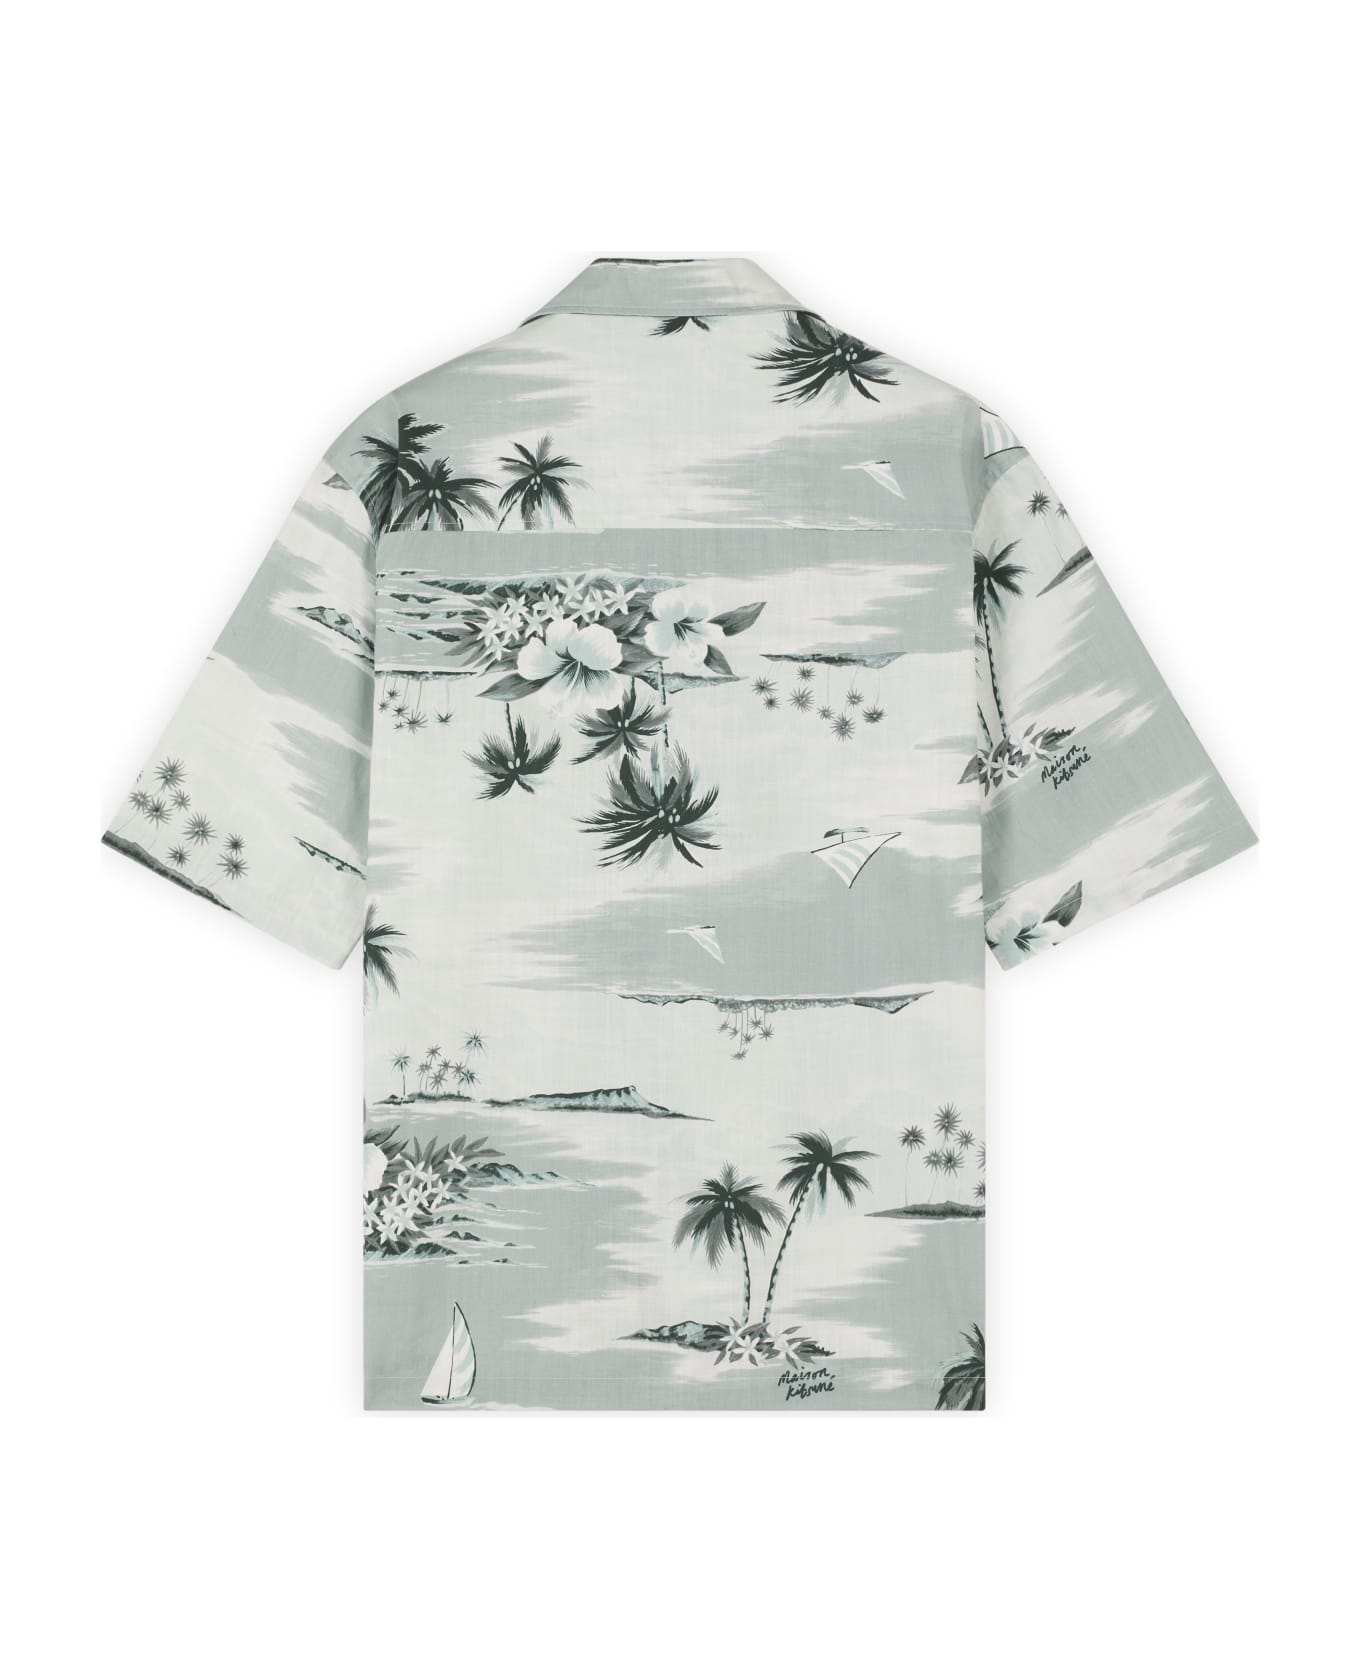 Maison Kitsuné Resort Shirt - Seafoam Design シャツ